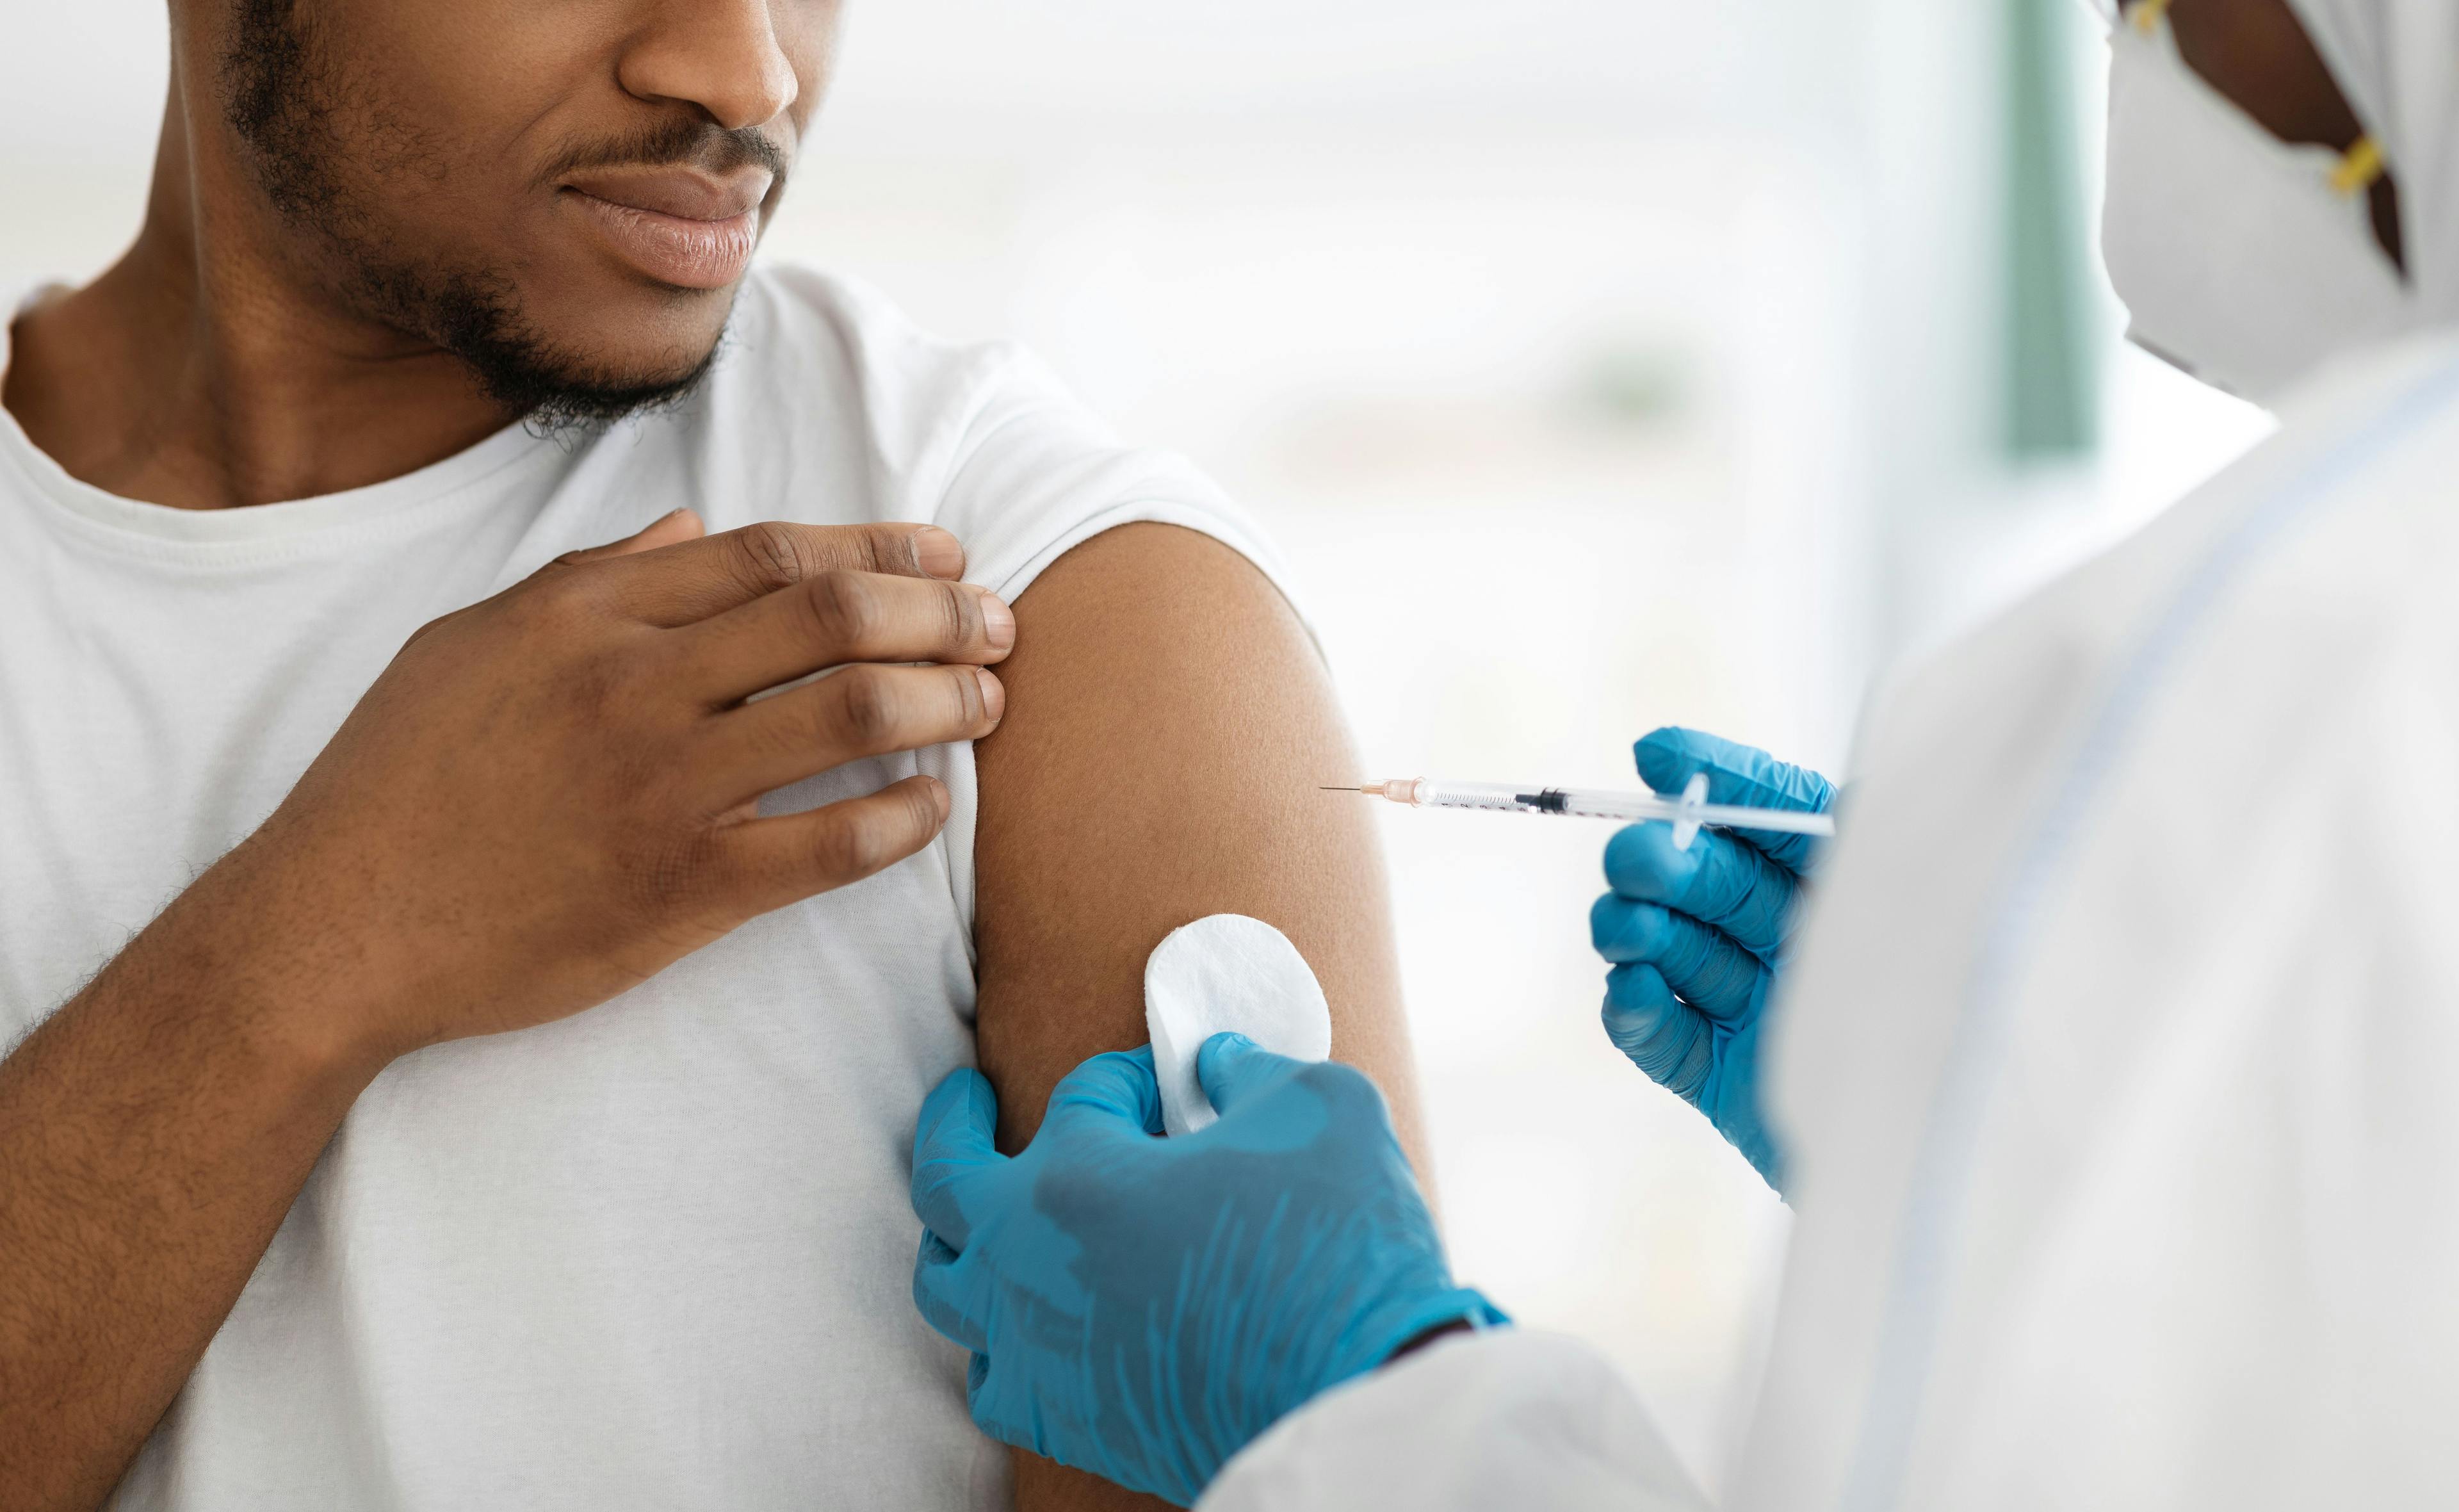 Cropped of black man receiving vaccine shot | Image Credit: Prostock-studio - stock.adobe.com